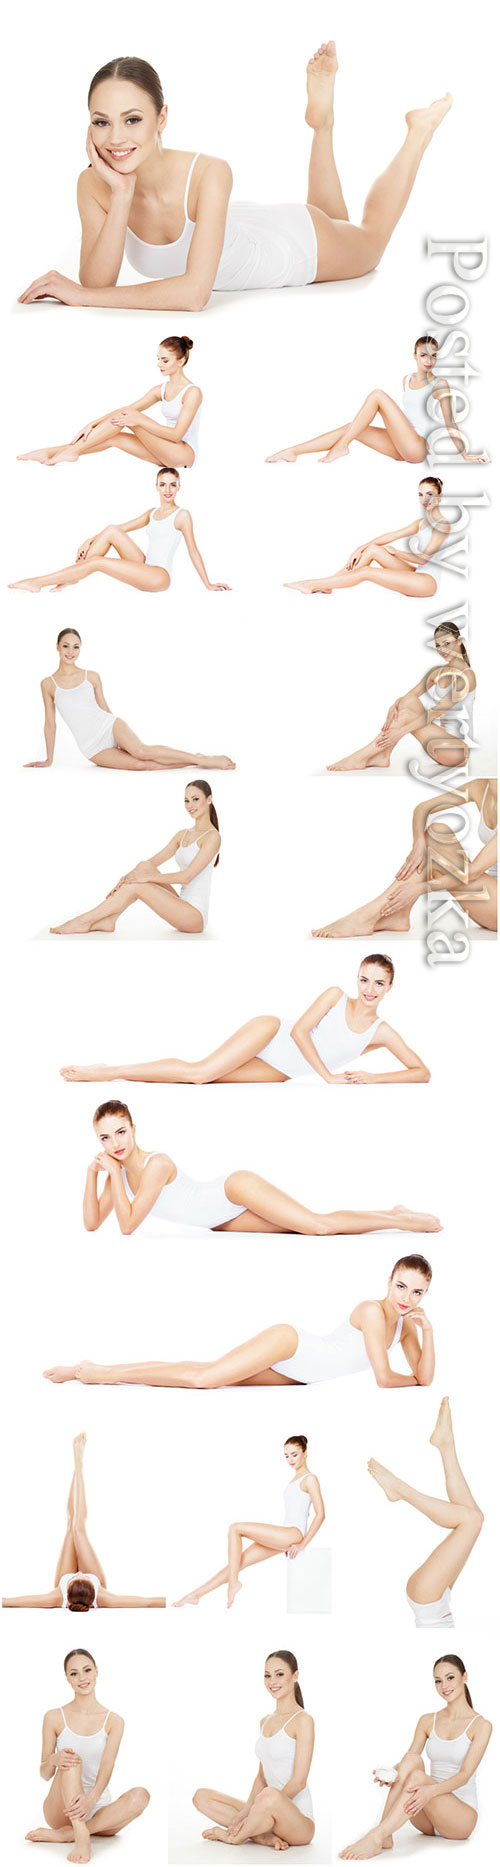 Girl in white bodysuit in different poses stock photo